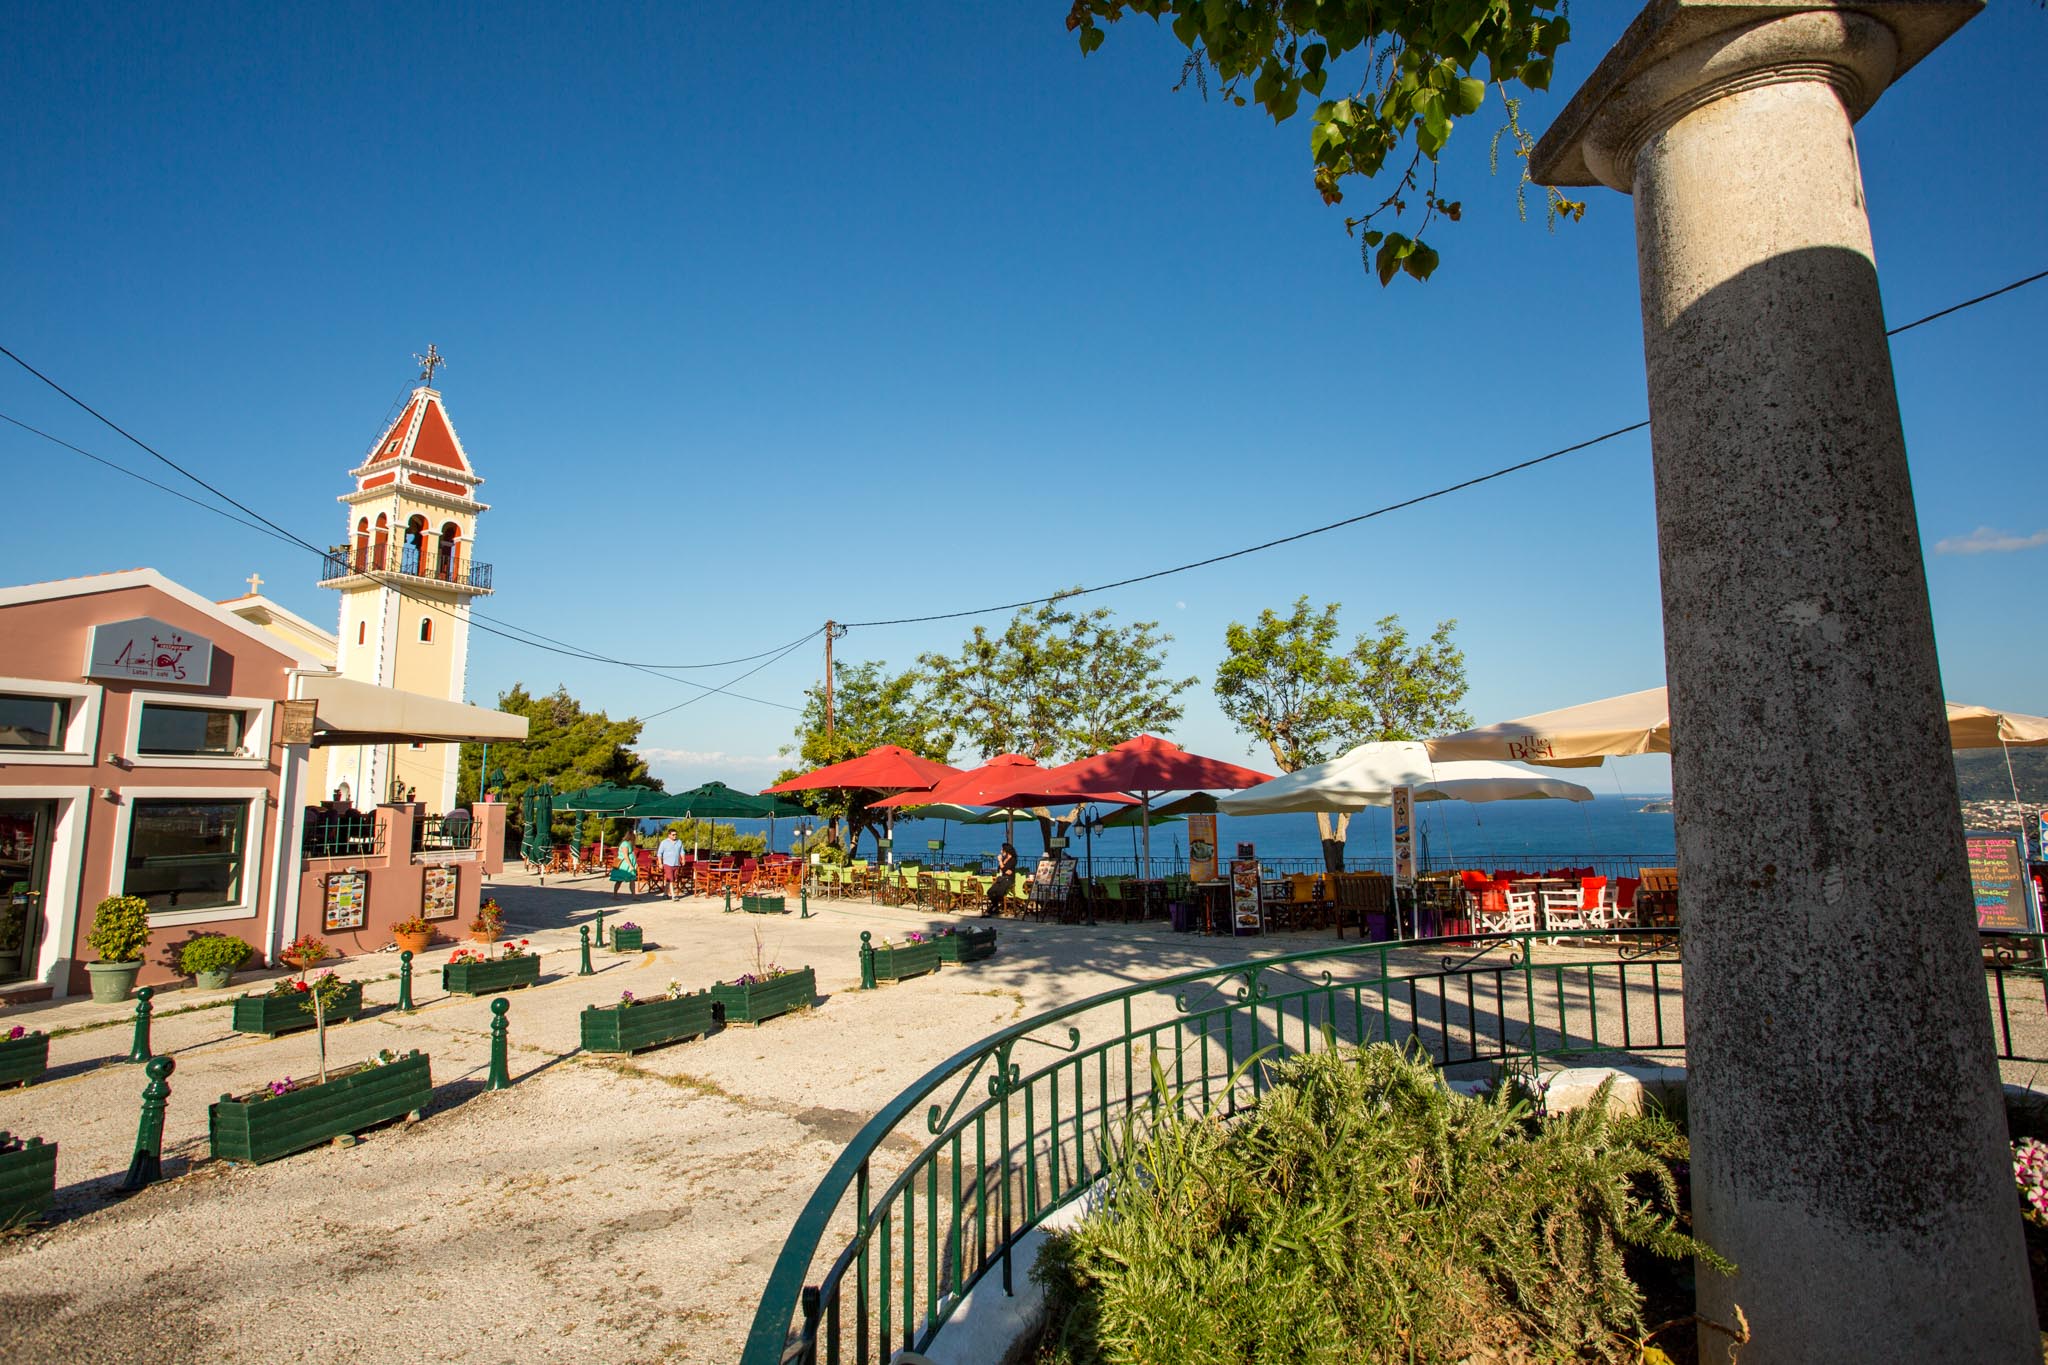 Bohali village's cafés and restaurants